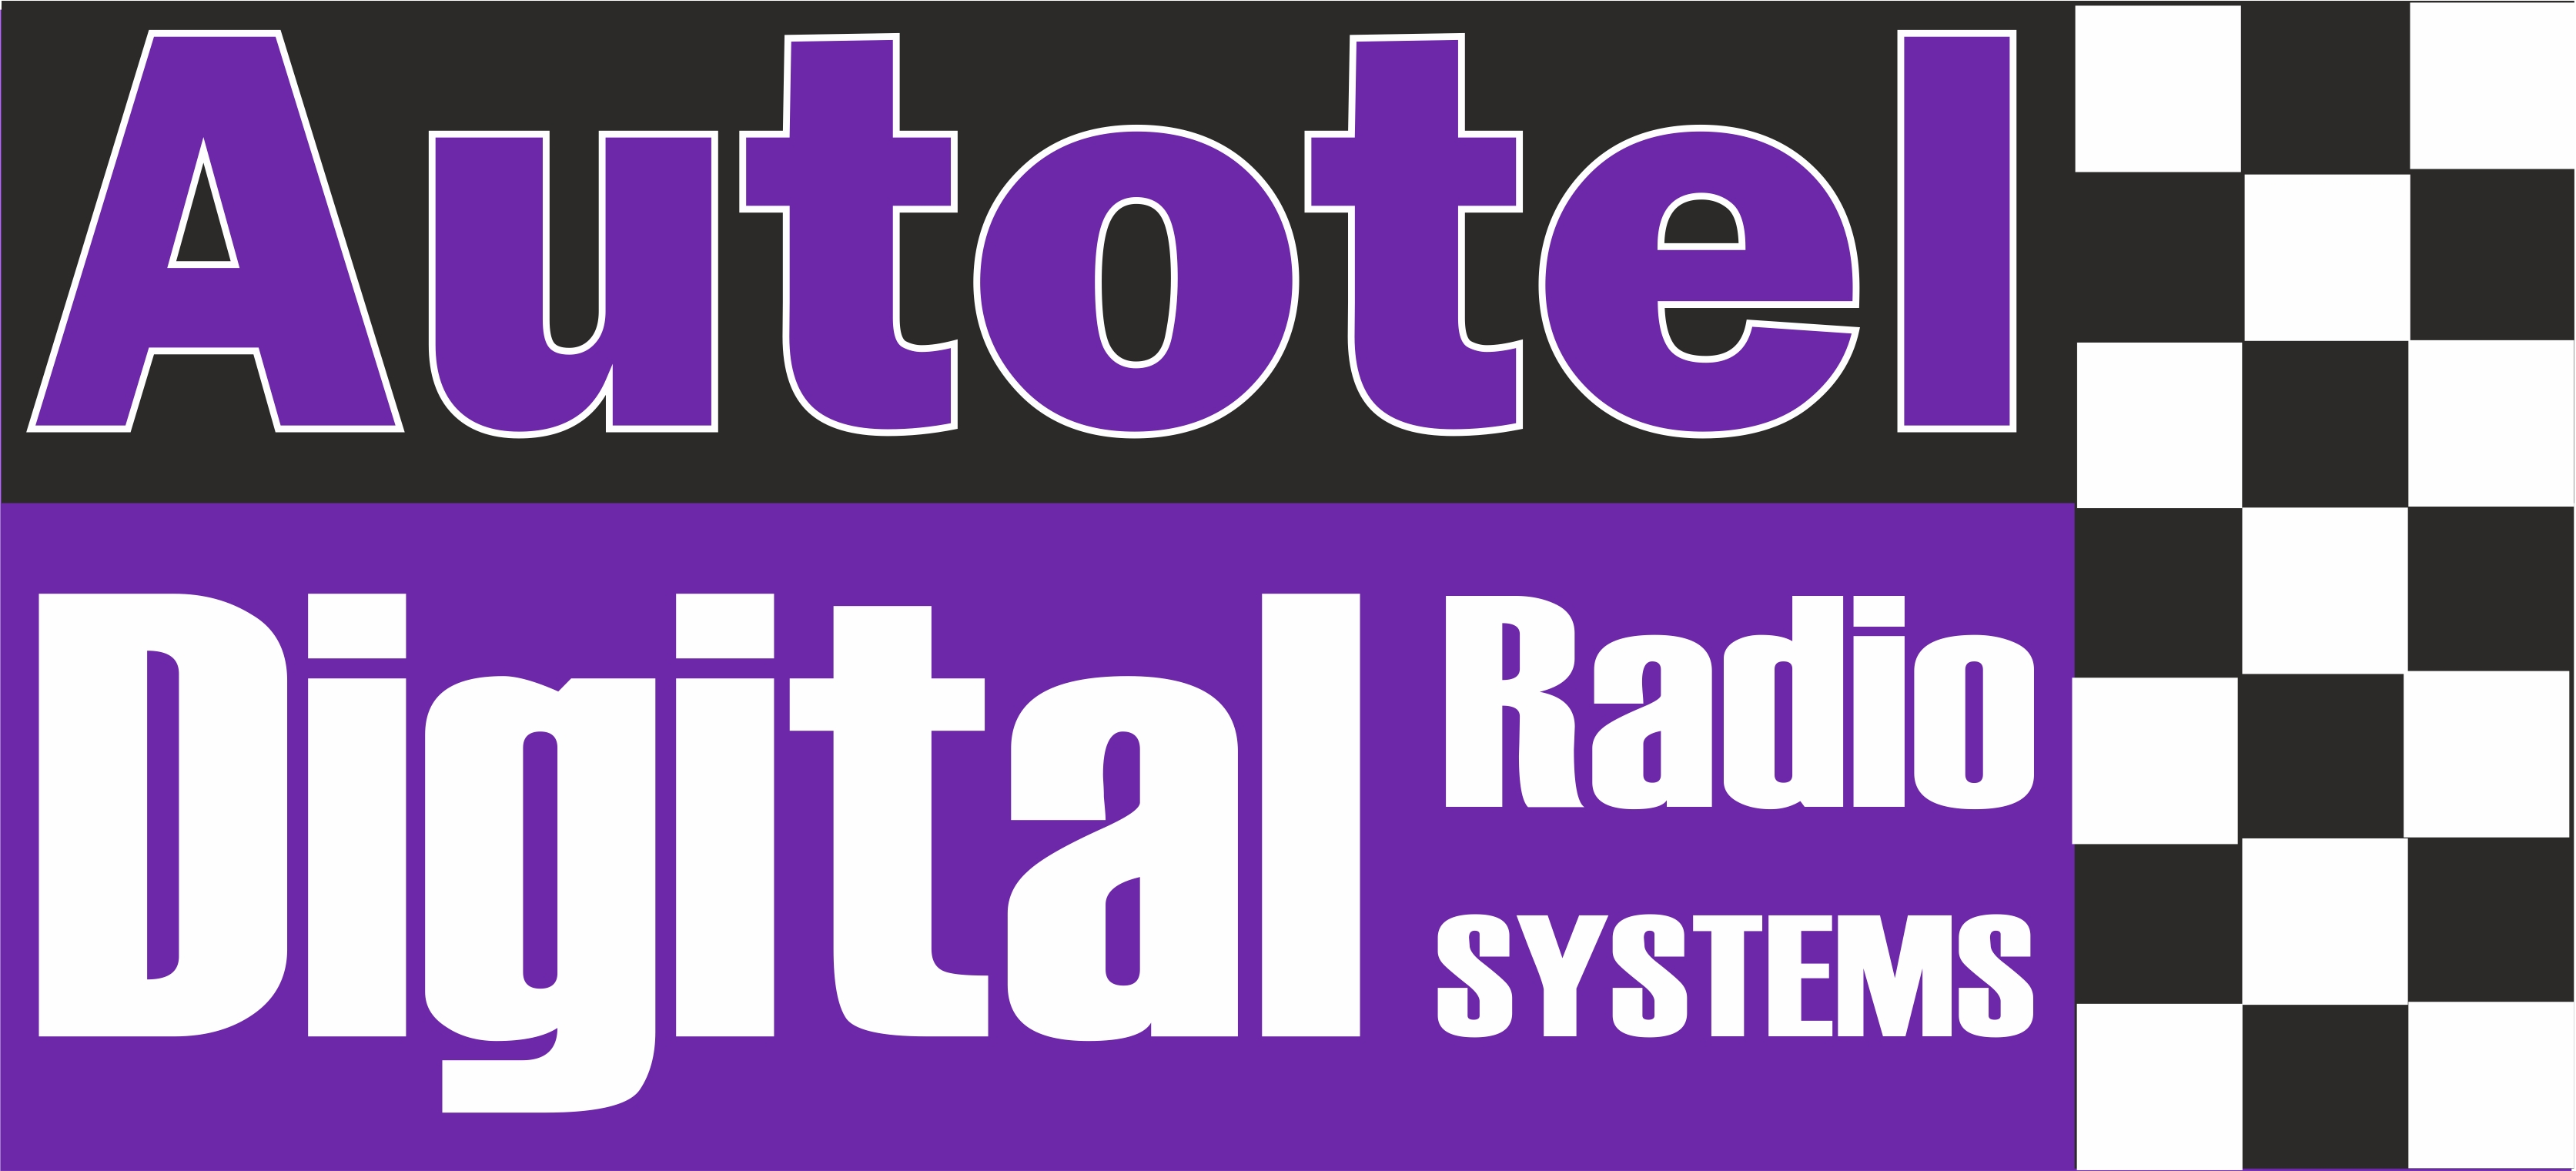 Autotel radio systems